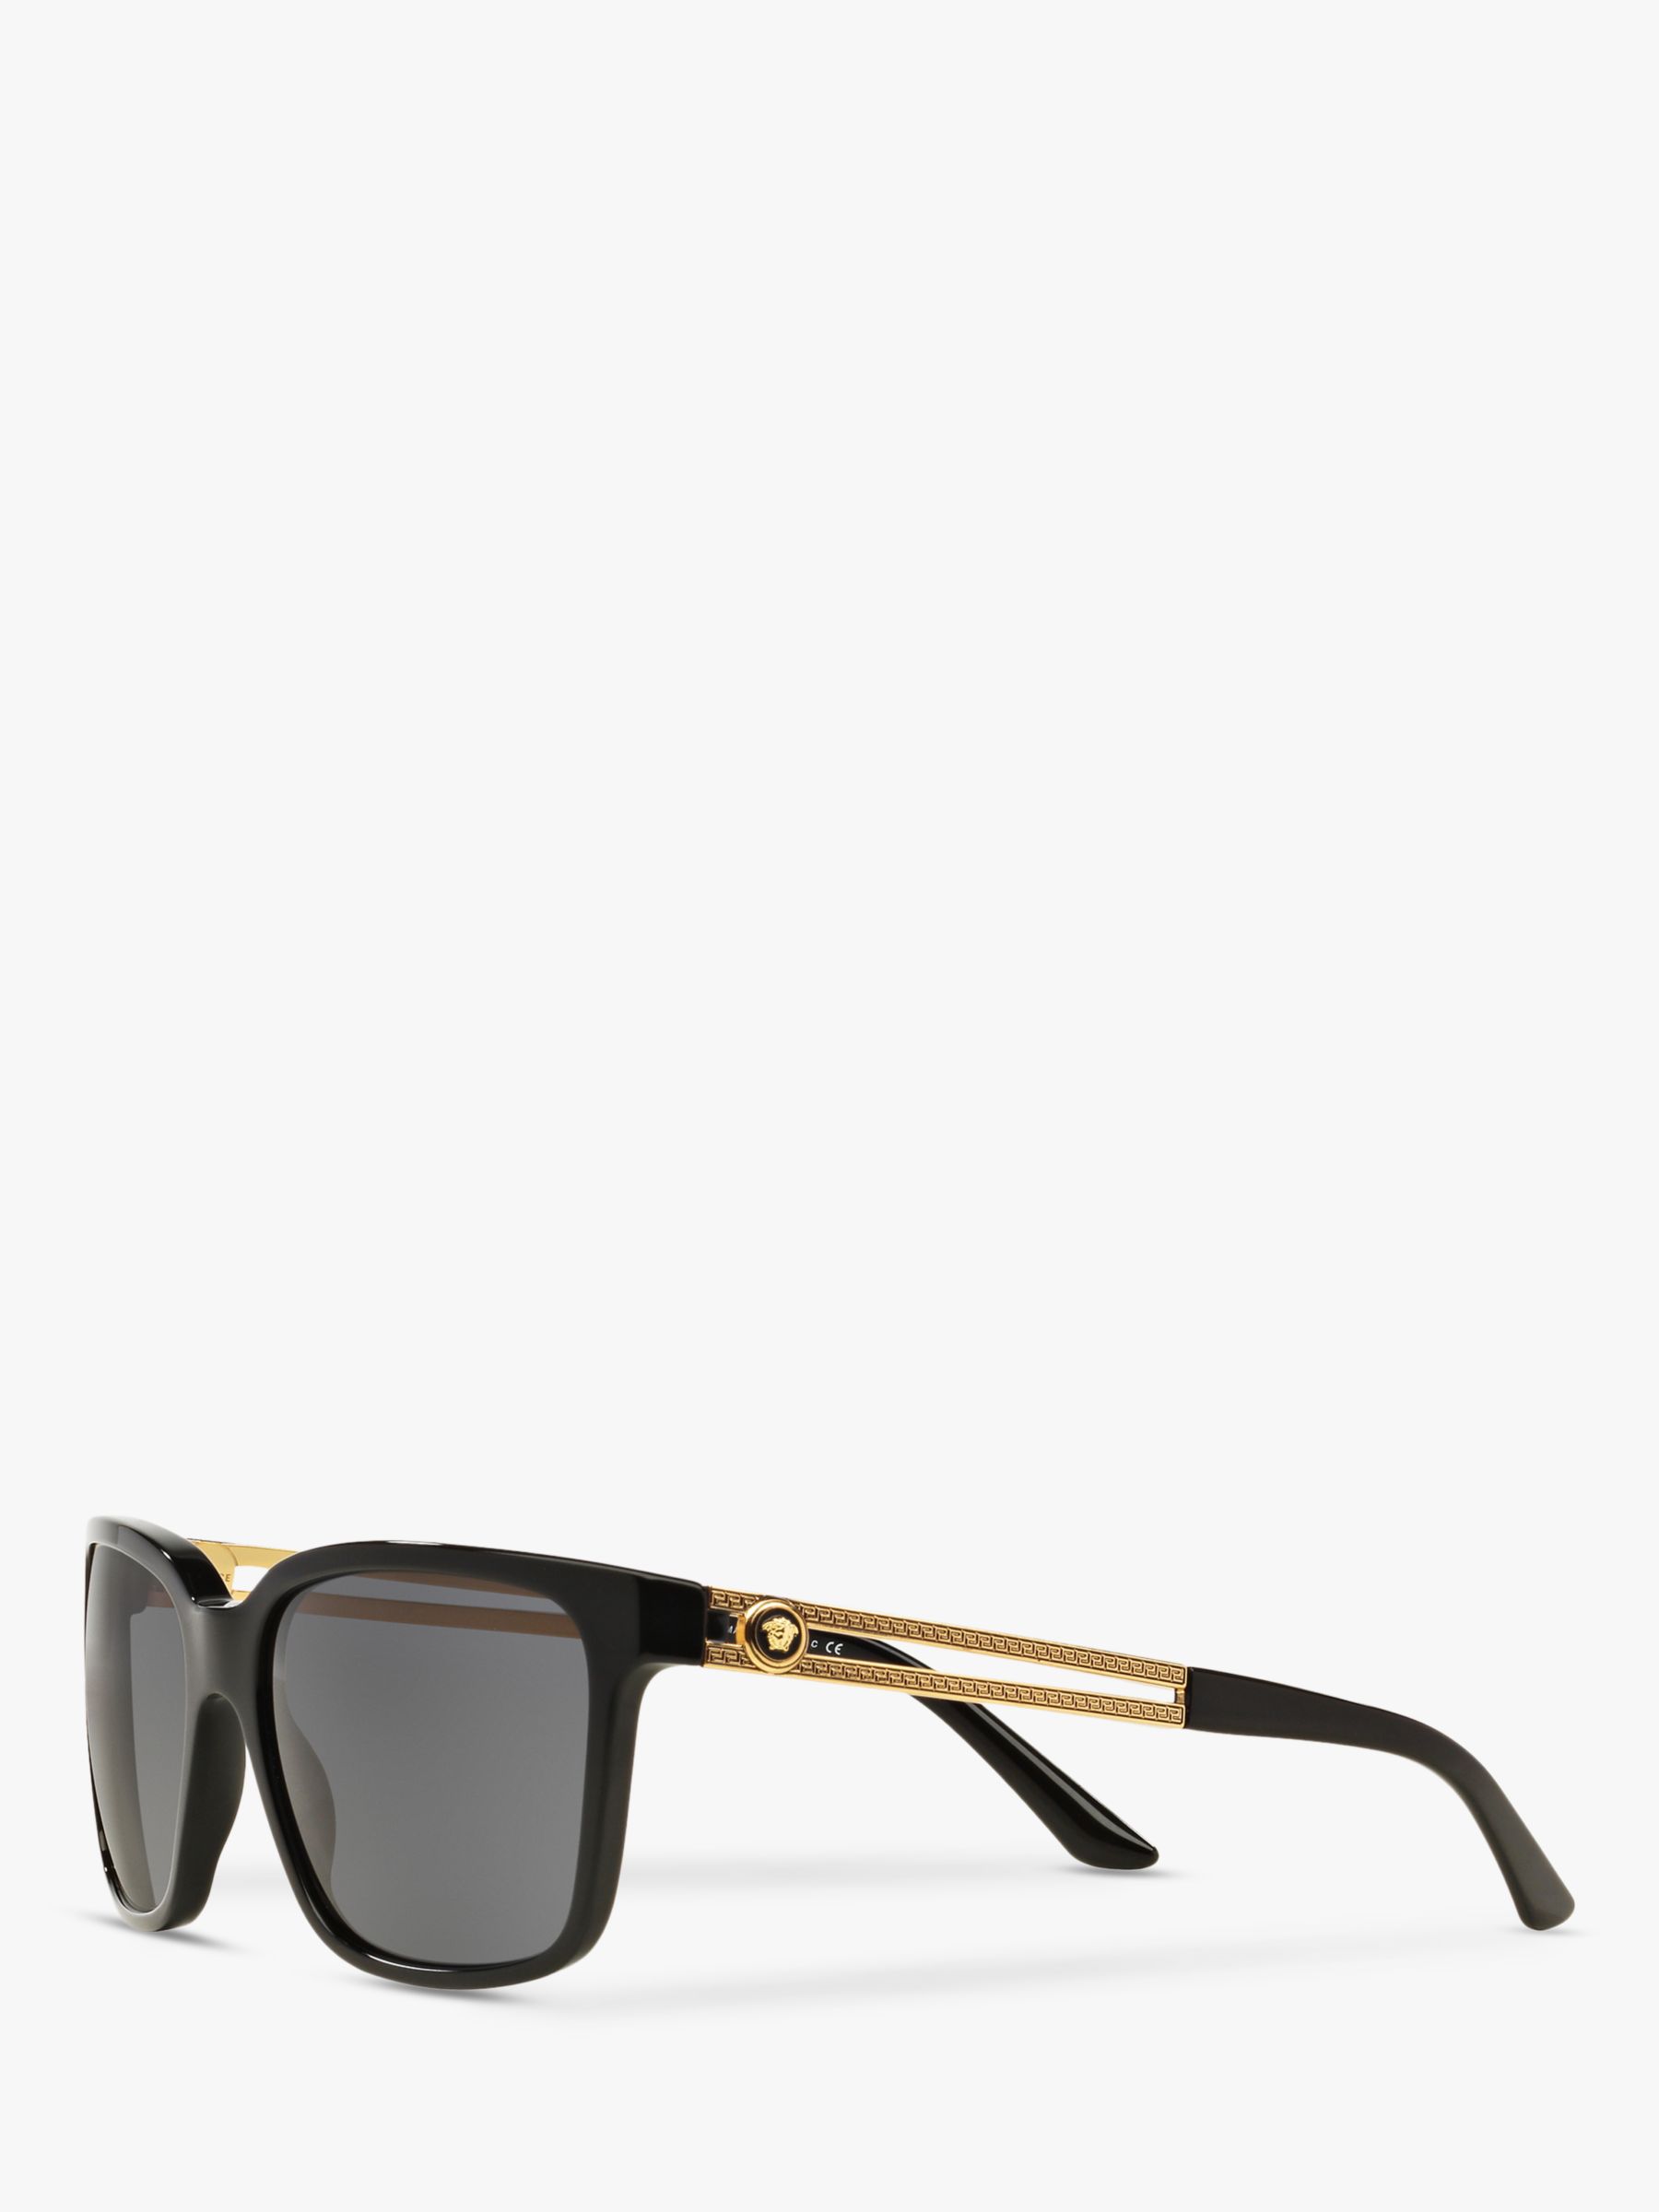 Buy Versace VE4307 Men's Square Sunglasses, Black/Grey Online at johnlewis.com